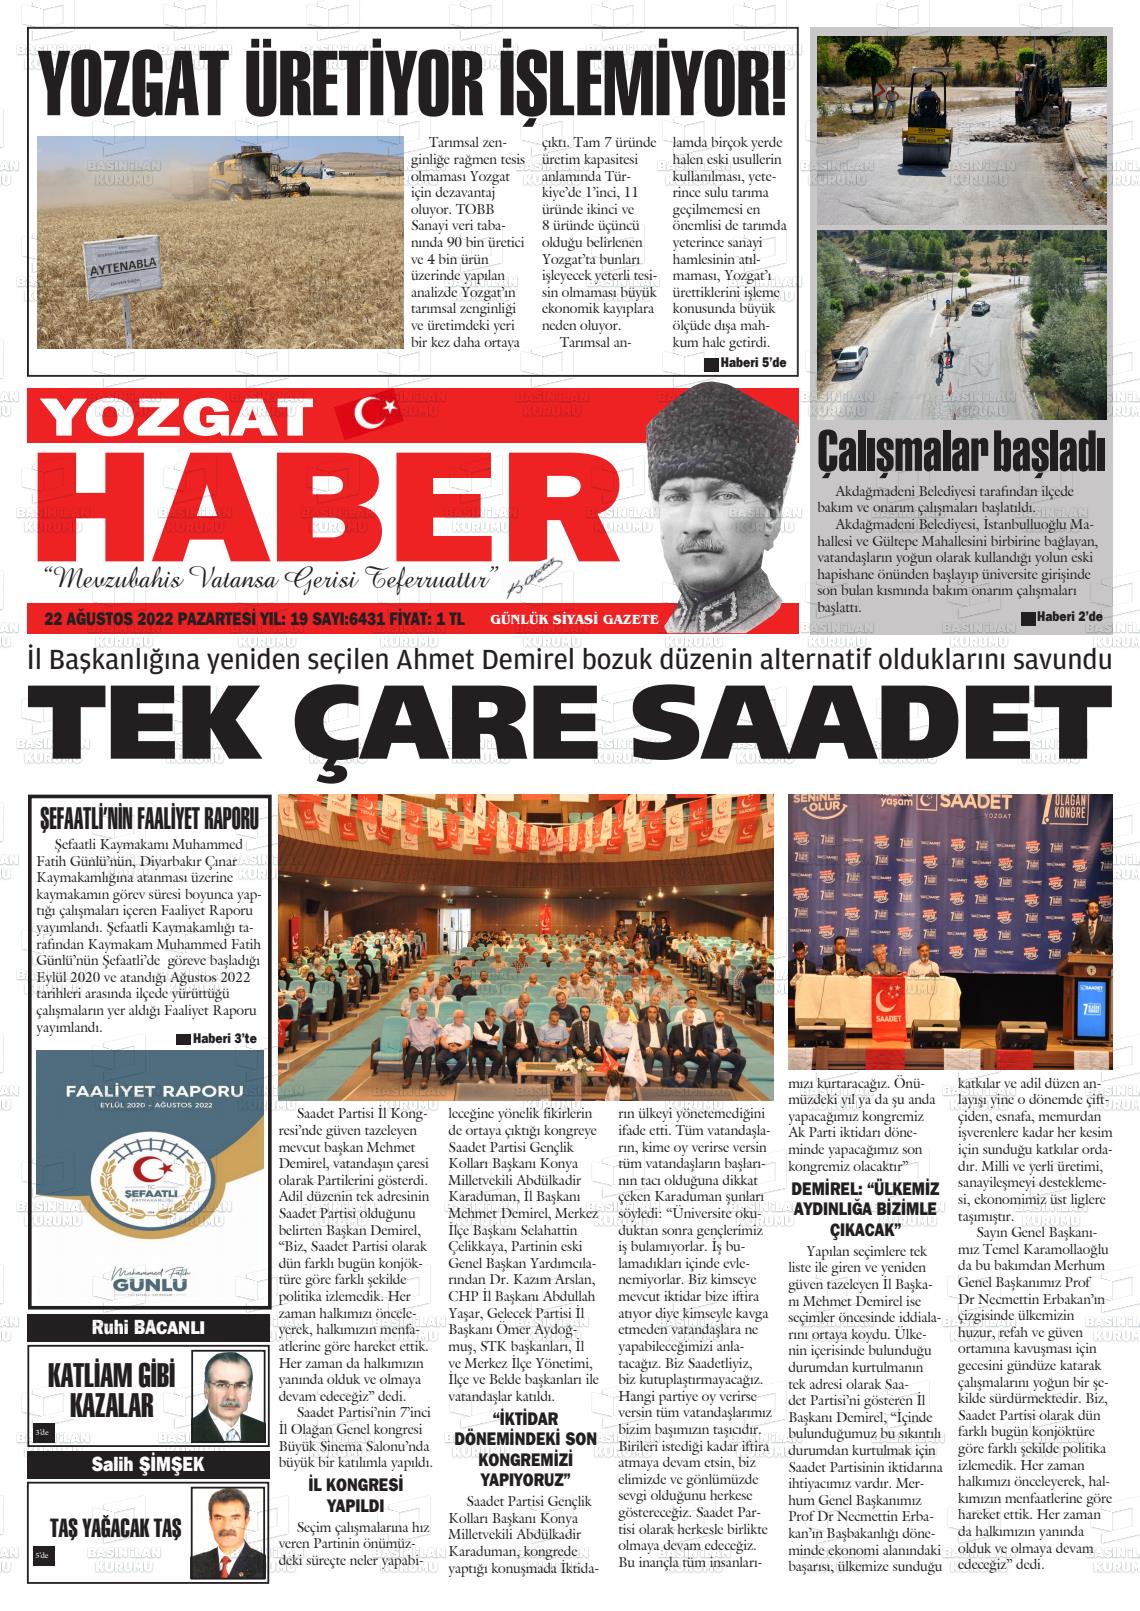 22 Ağustos 2022 Yozgat Haber Gazete Manşeti